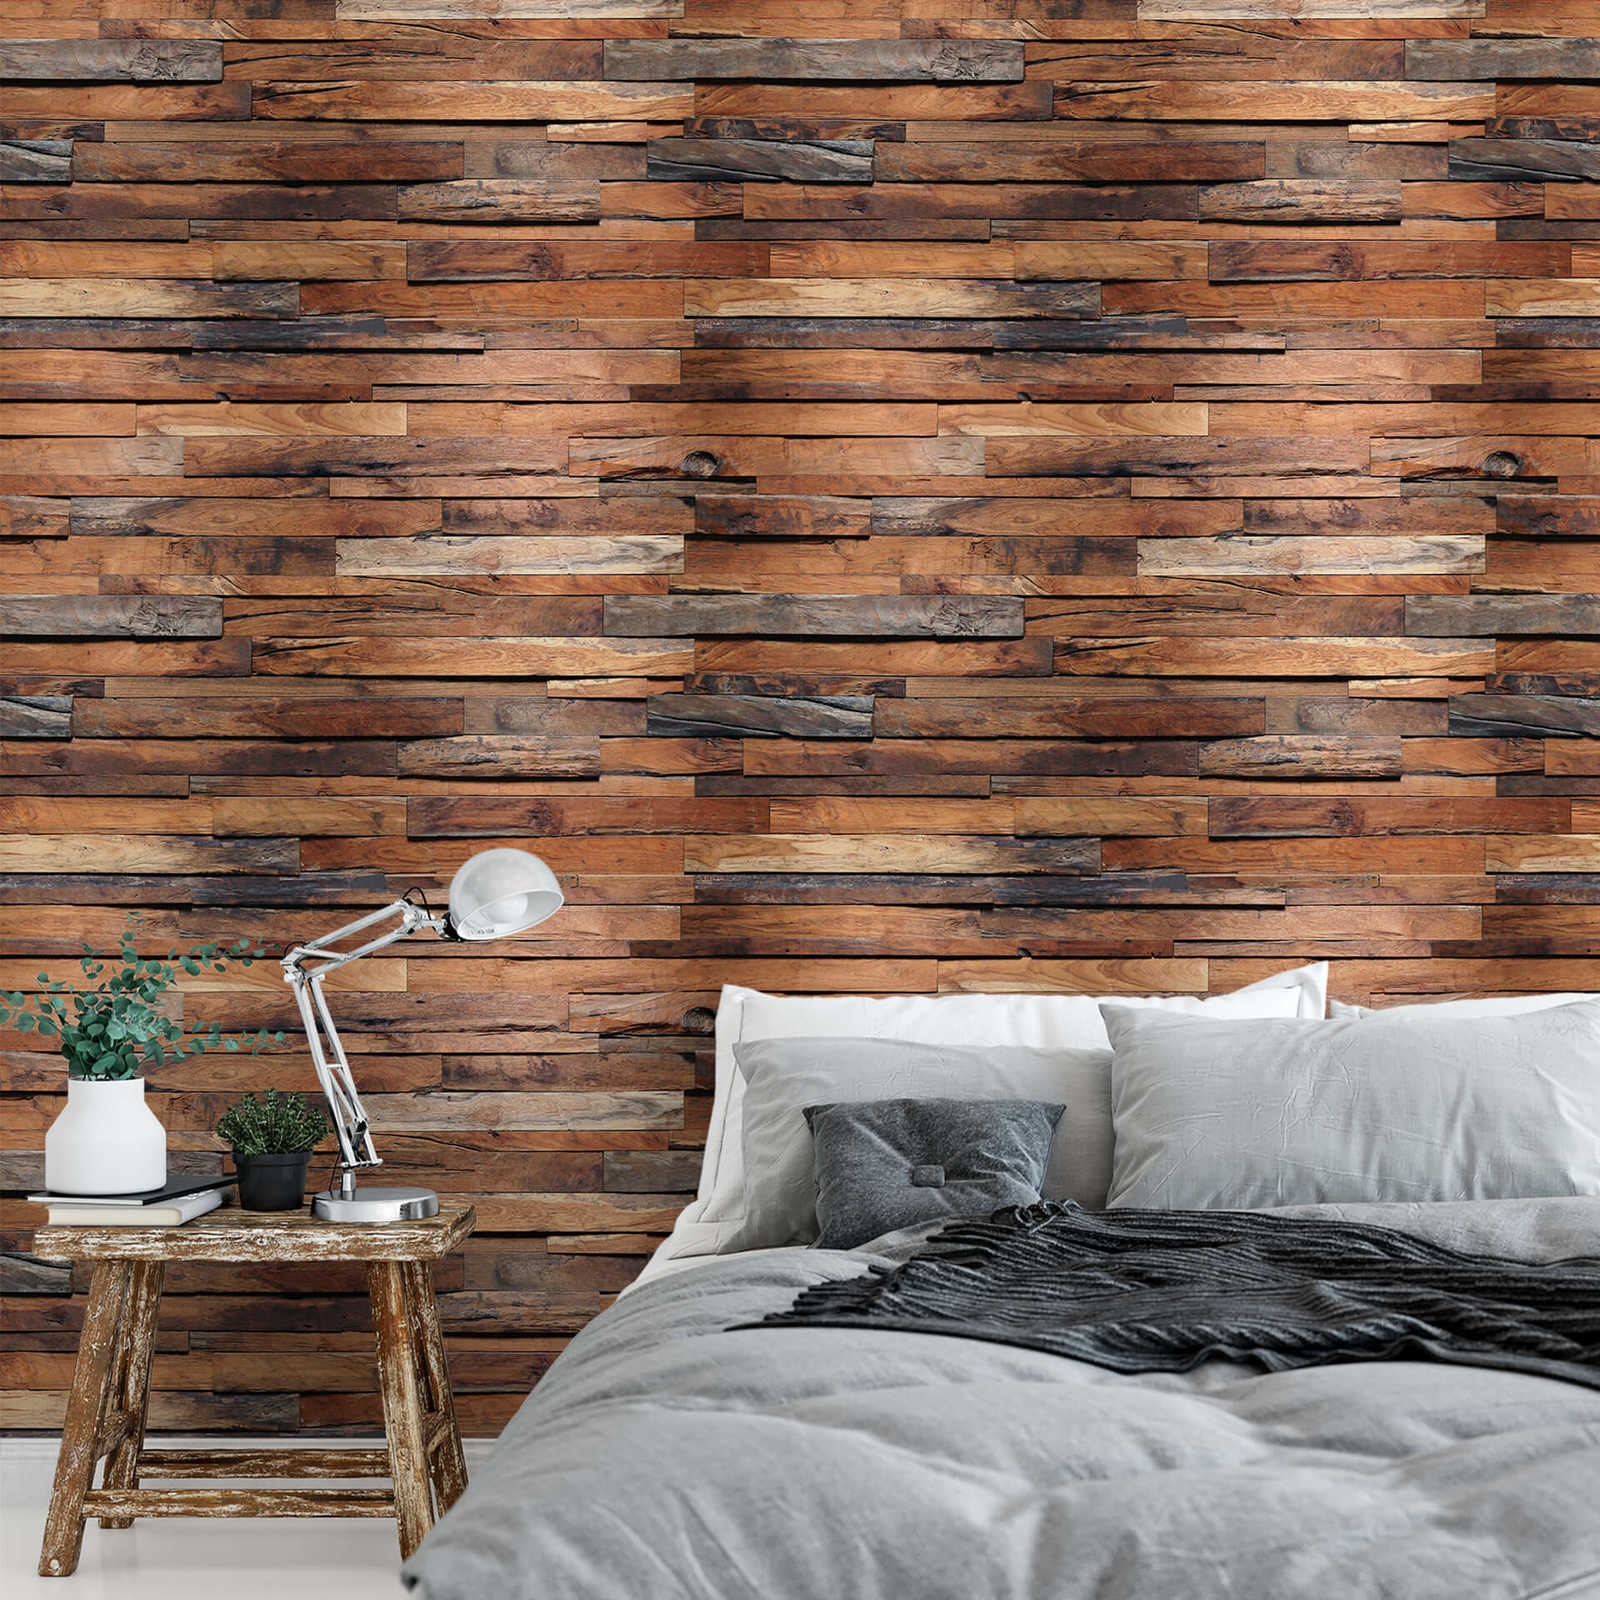             Photo wallpaper wood look rustic, 3D parquet pattern - Brown
        